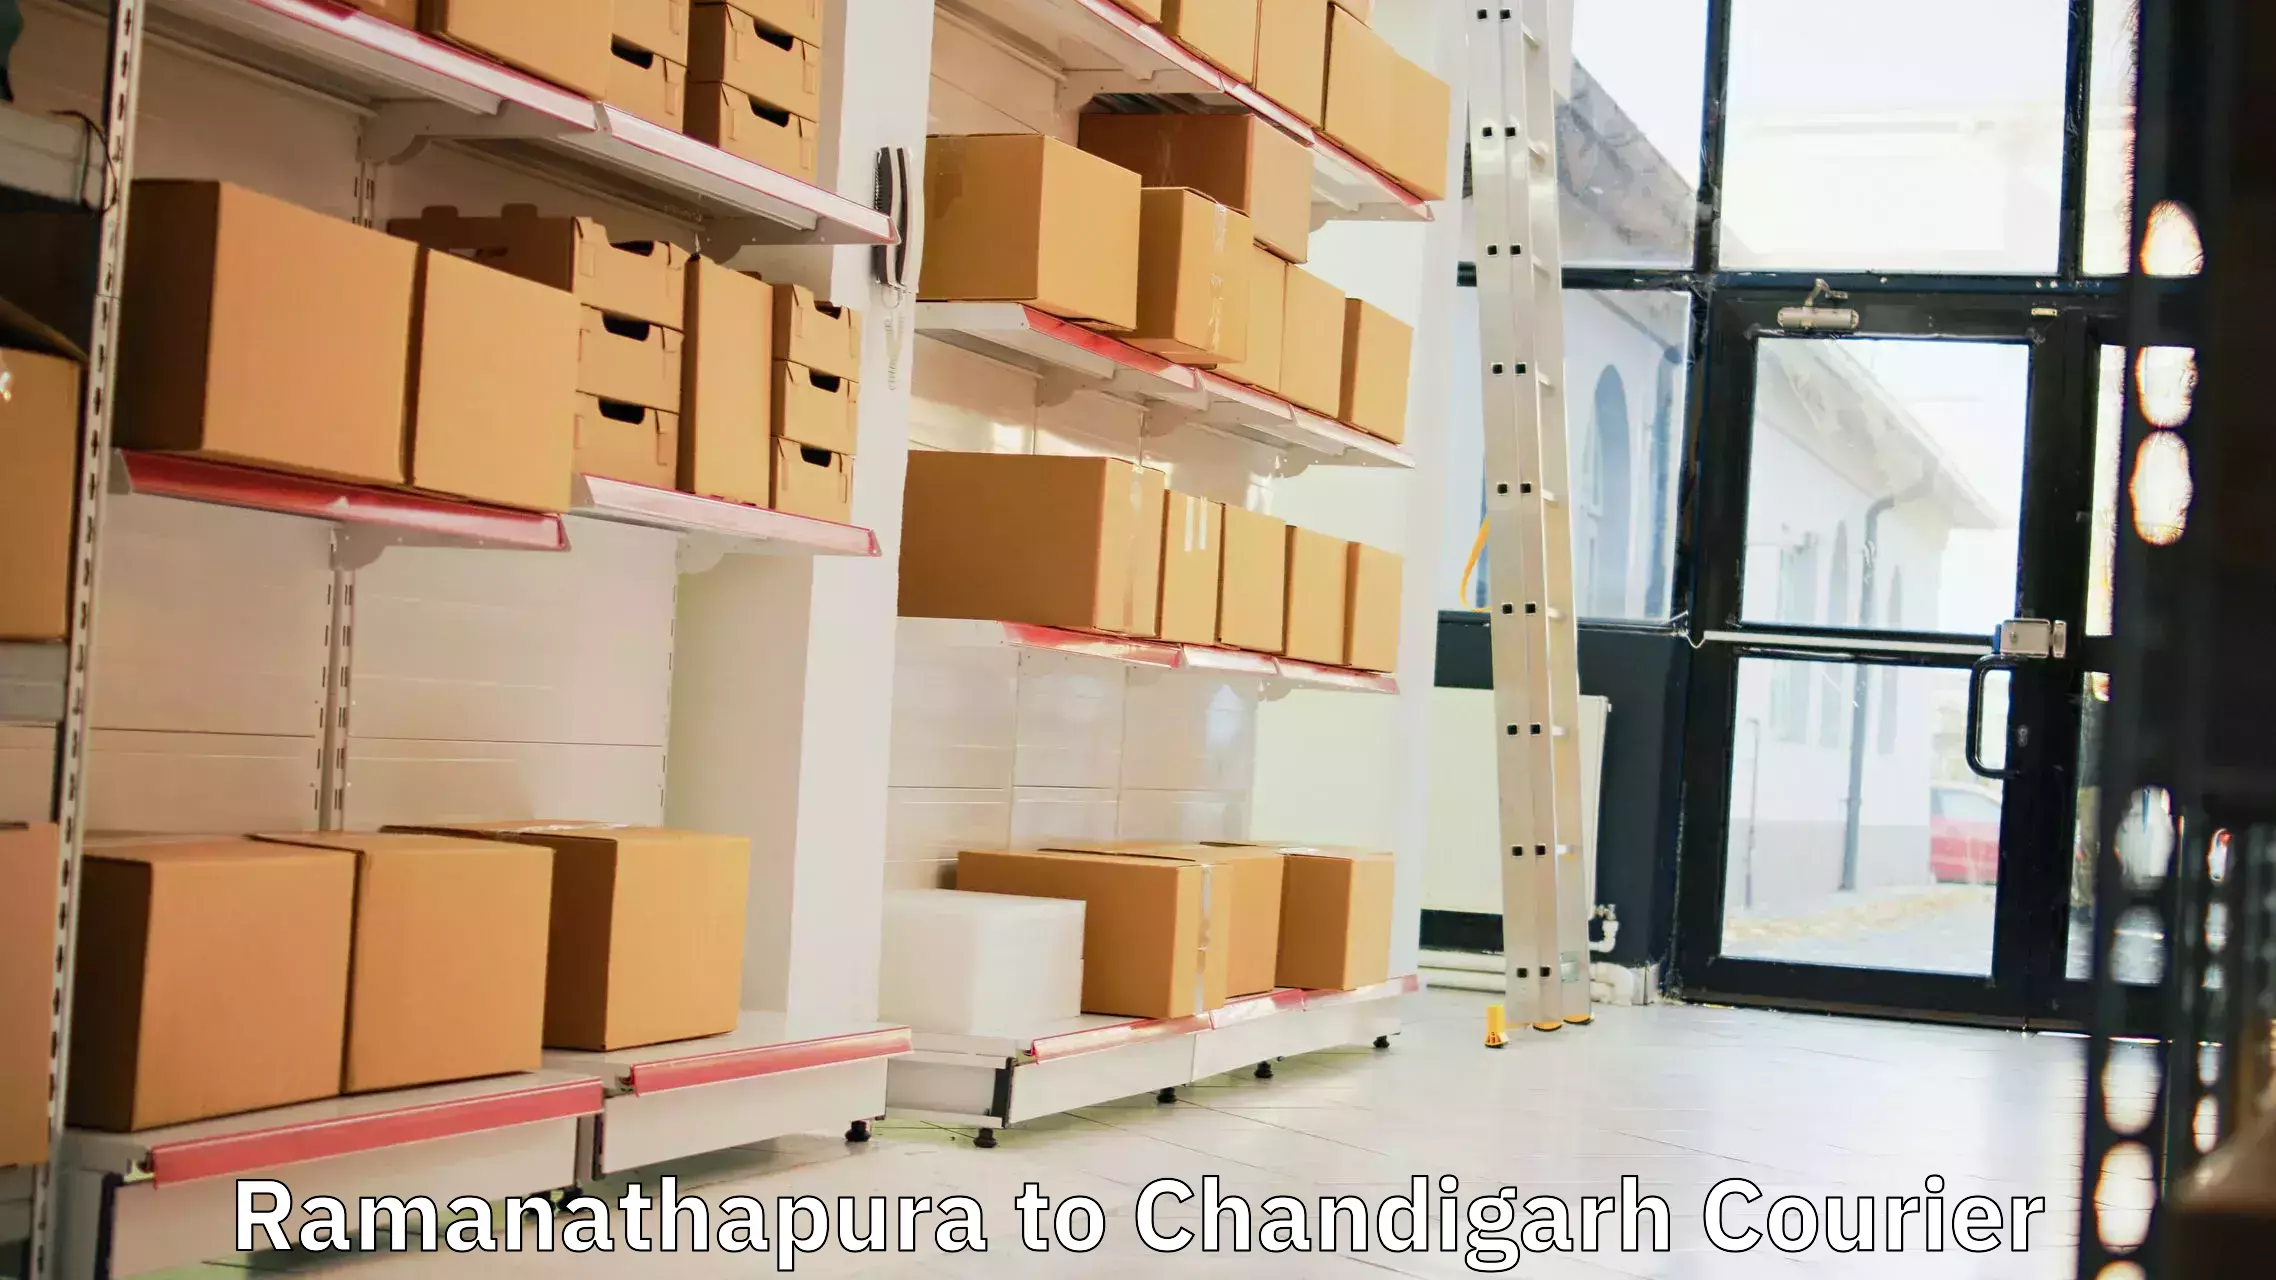 Global courier networks Ramanathapura to Chandigarh